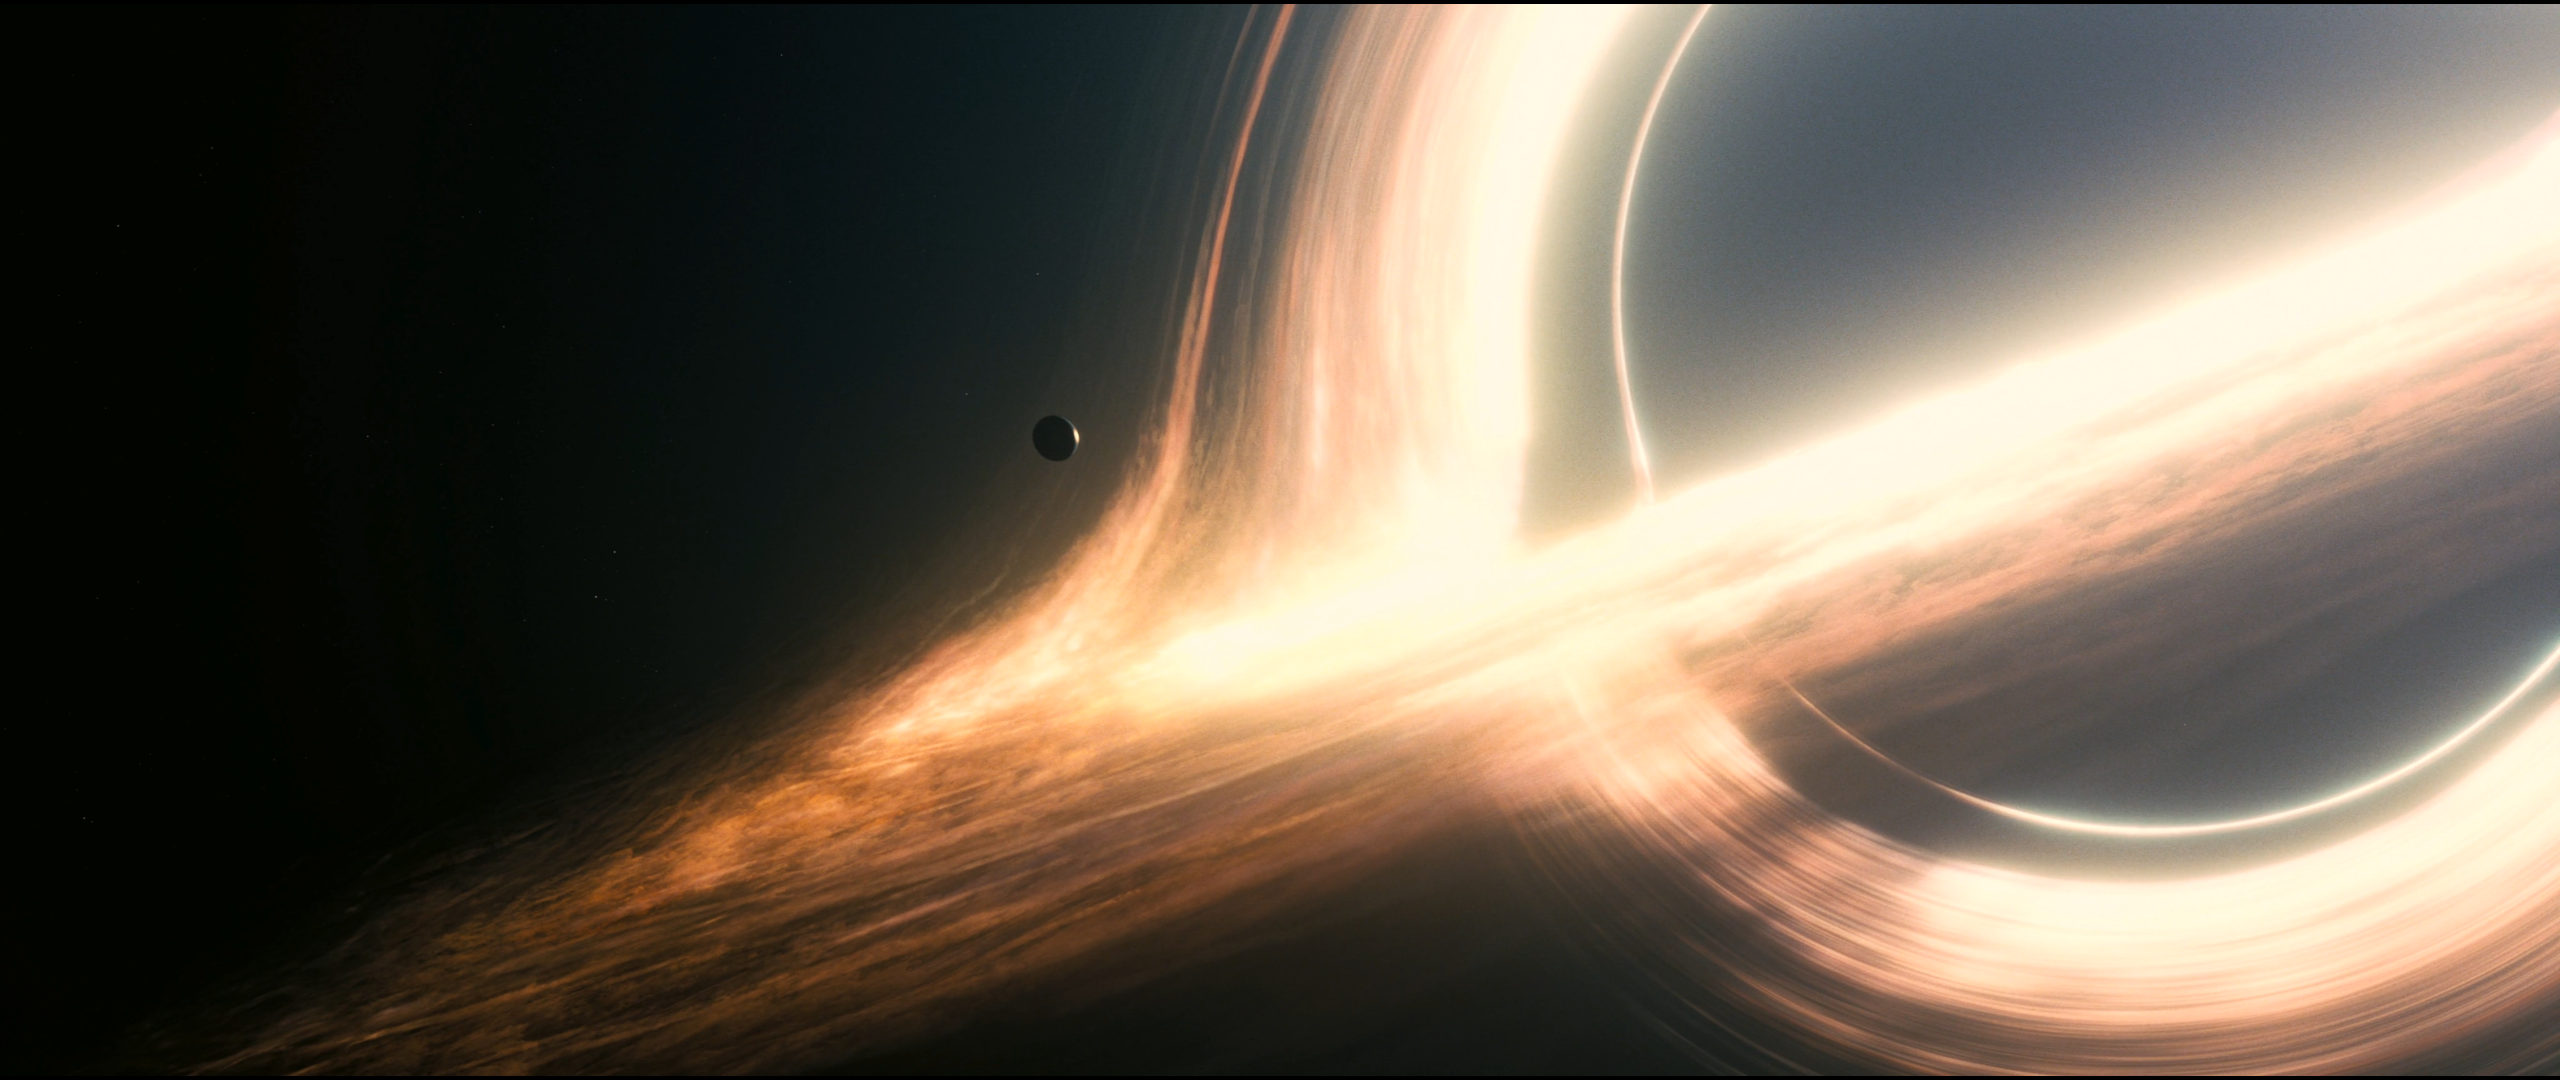 DeviantArt More Like Interstellar Blackhole 2 Wallpaper 2560 x